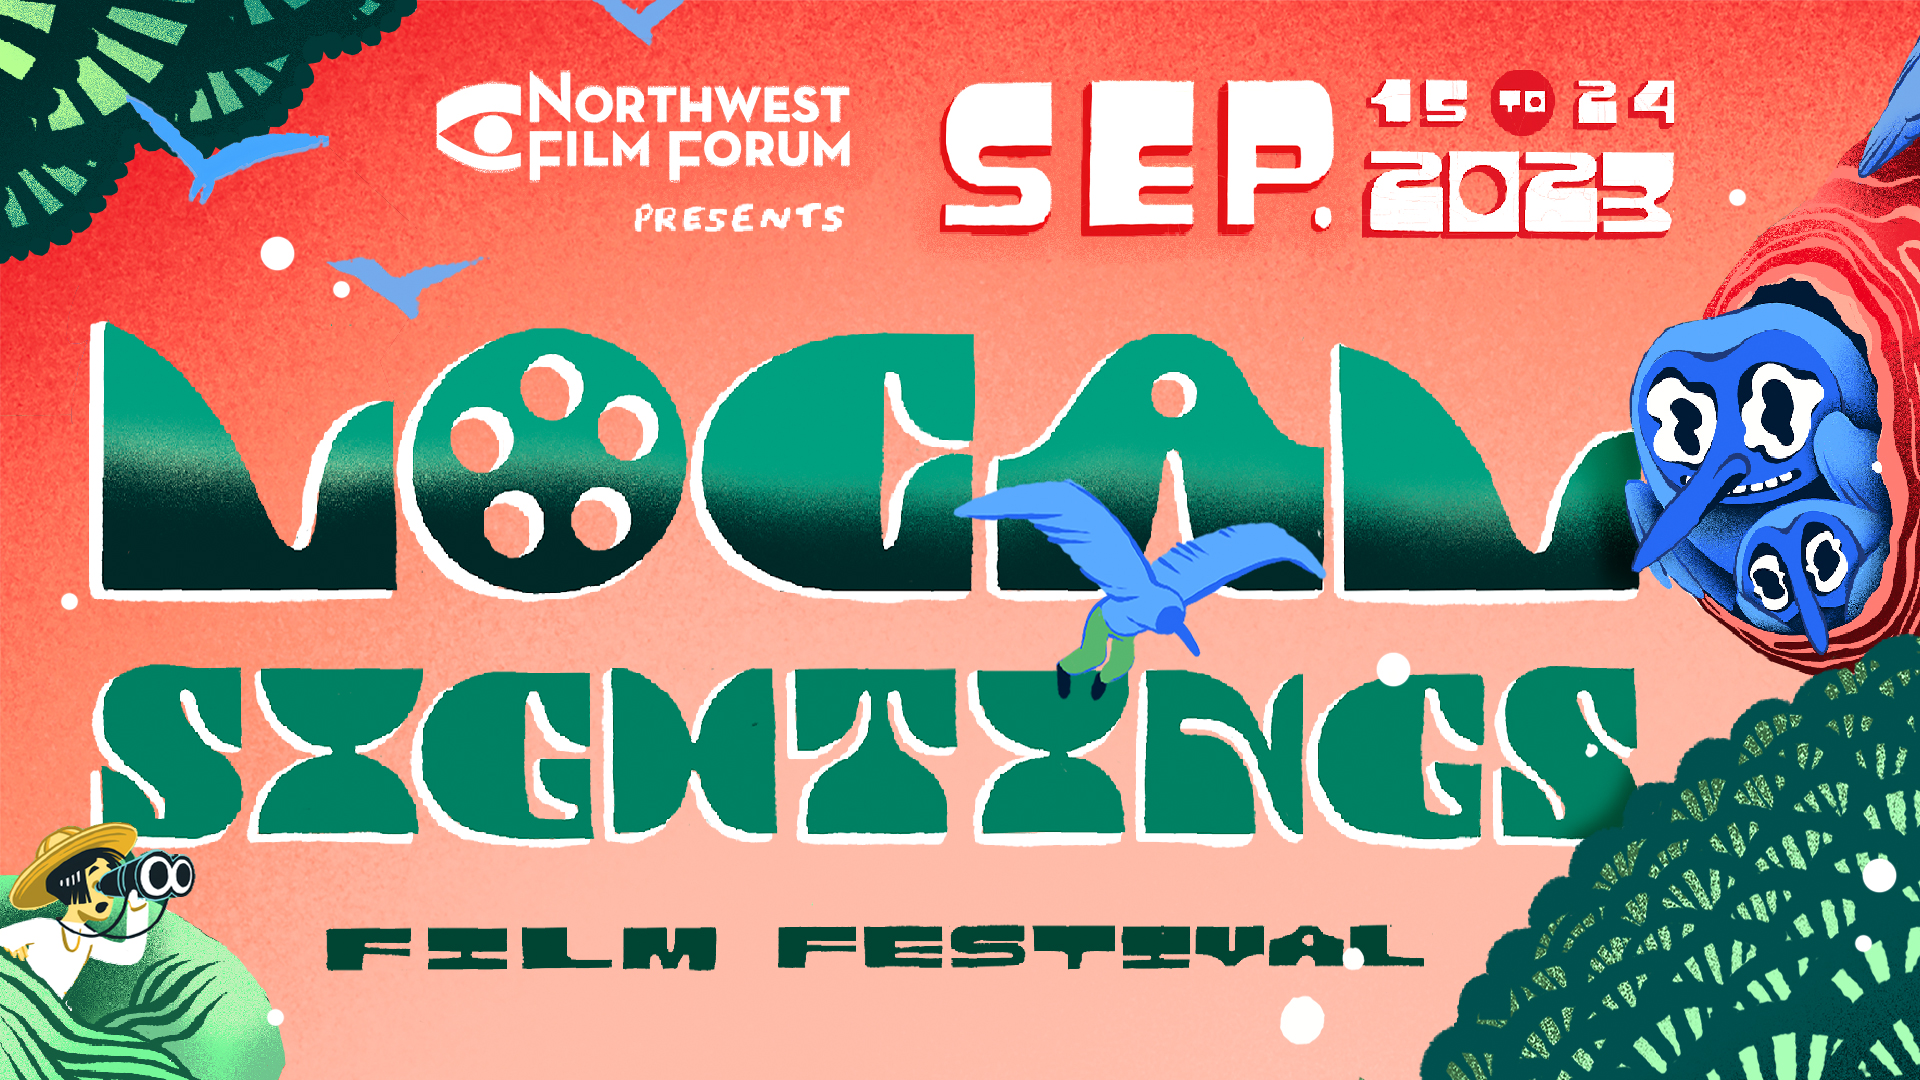 Local Sightings Film Festival 2023 Announces Award Winners for Best Feature  u0026 Short Films - Northwest Film Forum